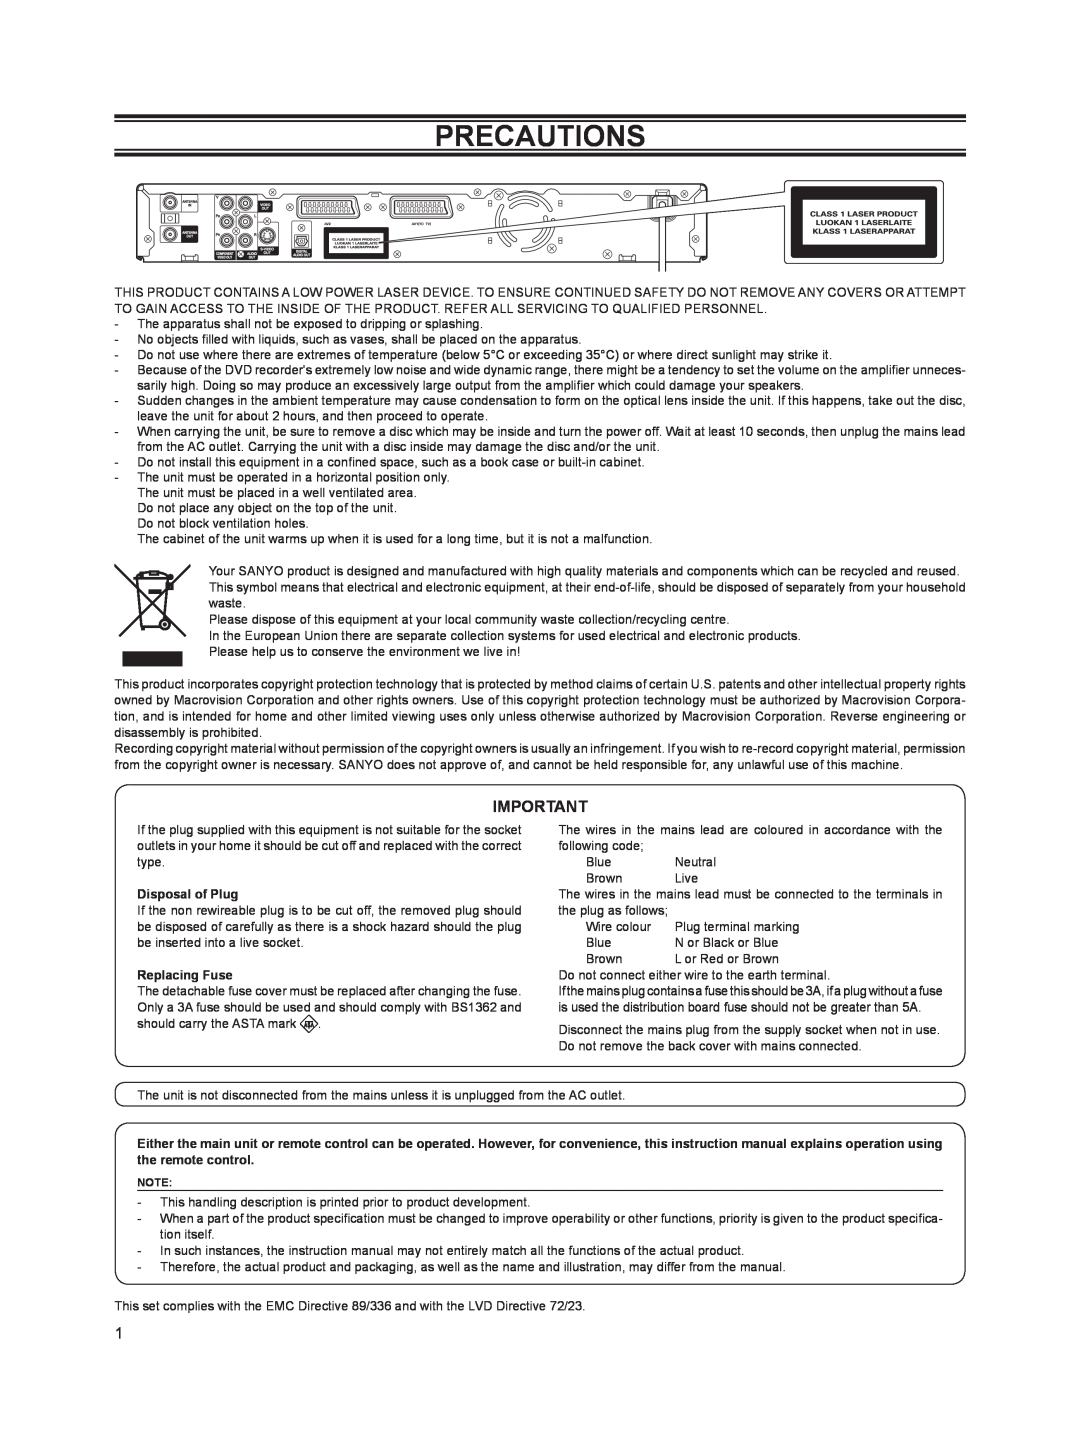 Sanyo DVR-HT120 instruction manual Precautions, Disposal of Plug, Replacing Fuse 